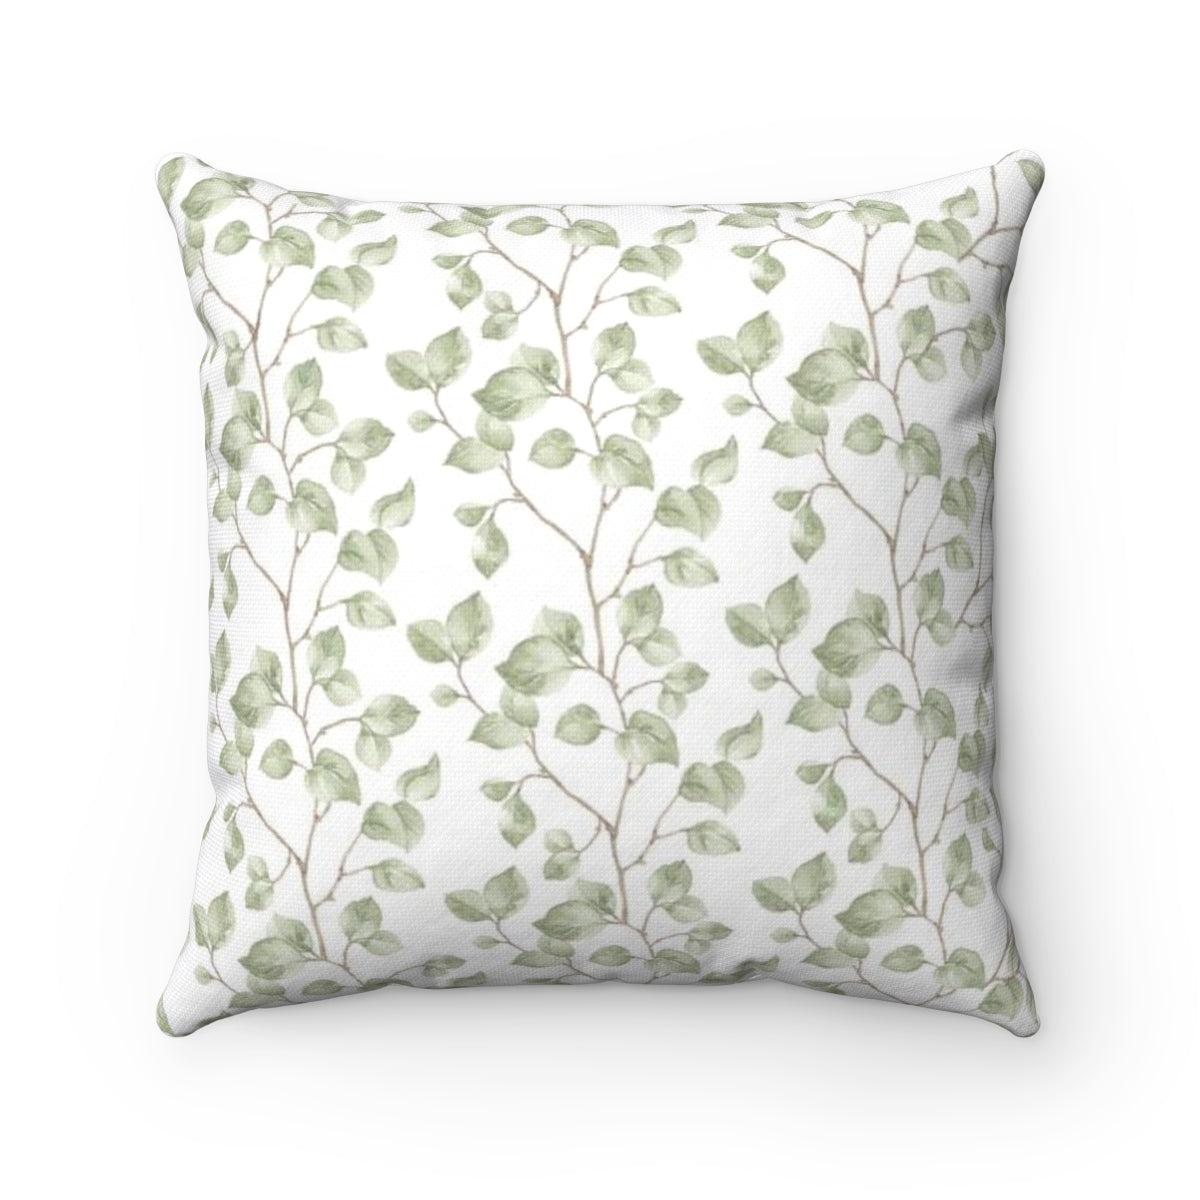 Green pattern Throw Pillow - Liz Kapiloto Art & Design